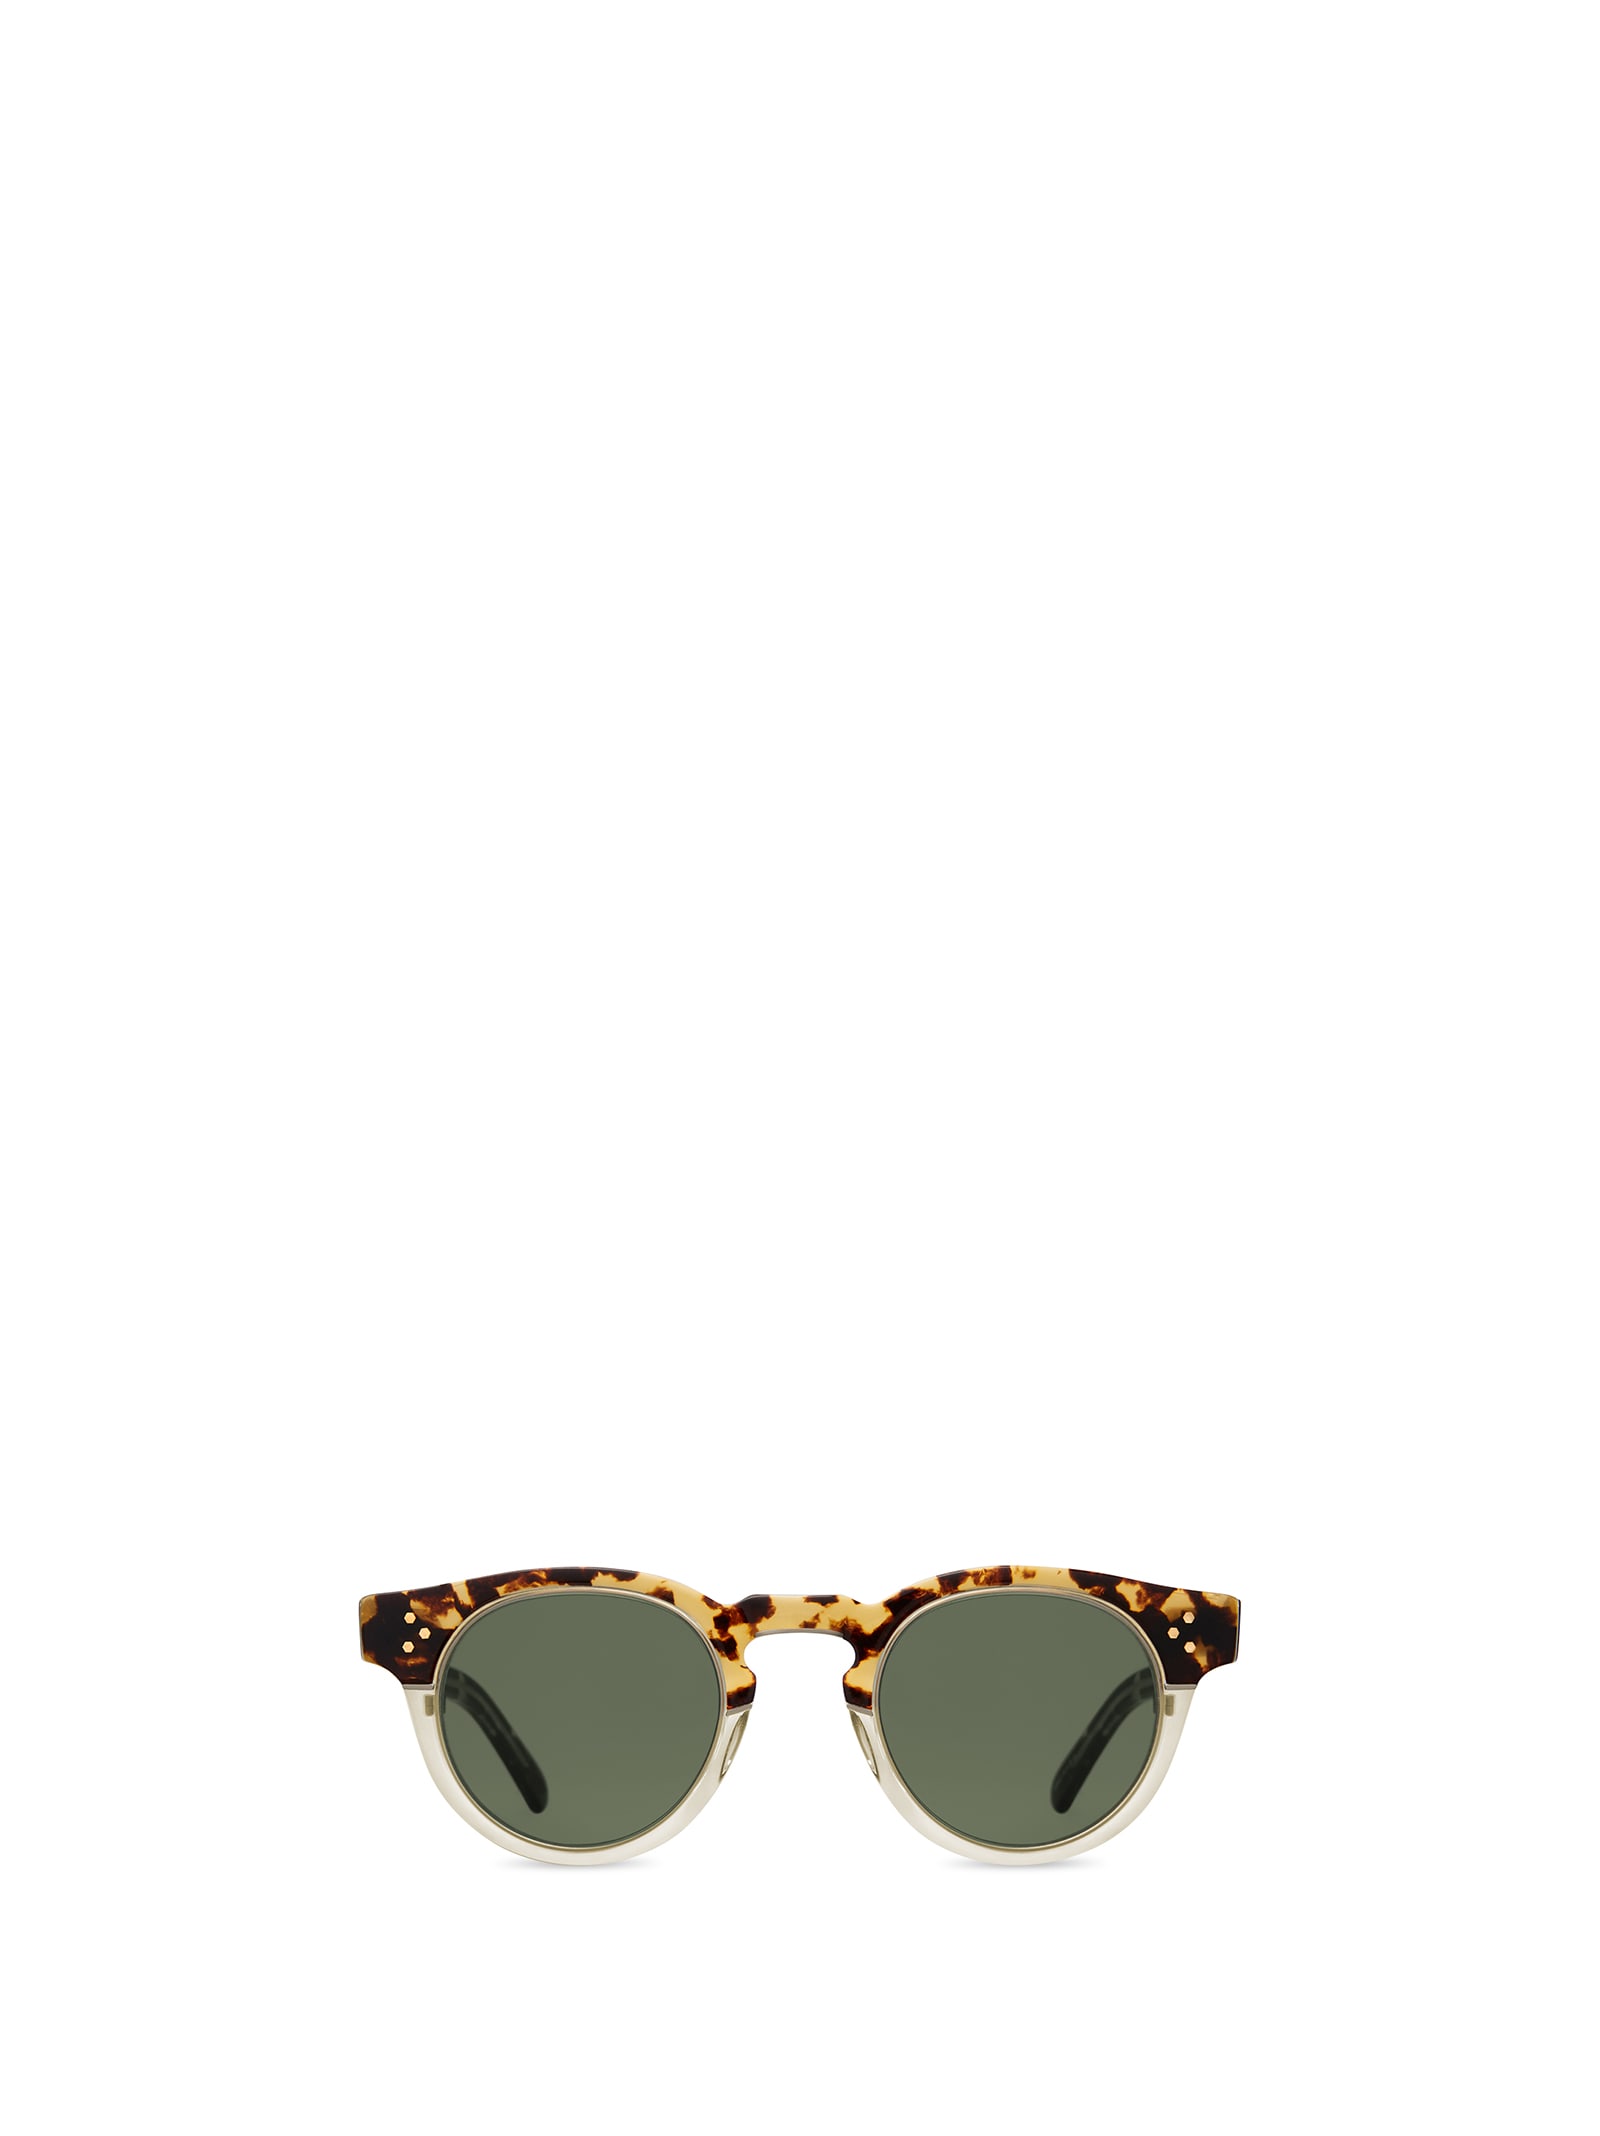 Kennedy S Bohemian Tortoise-12k Matte White Gold Sunglasses